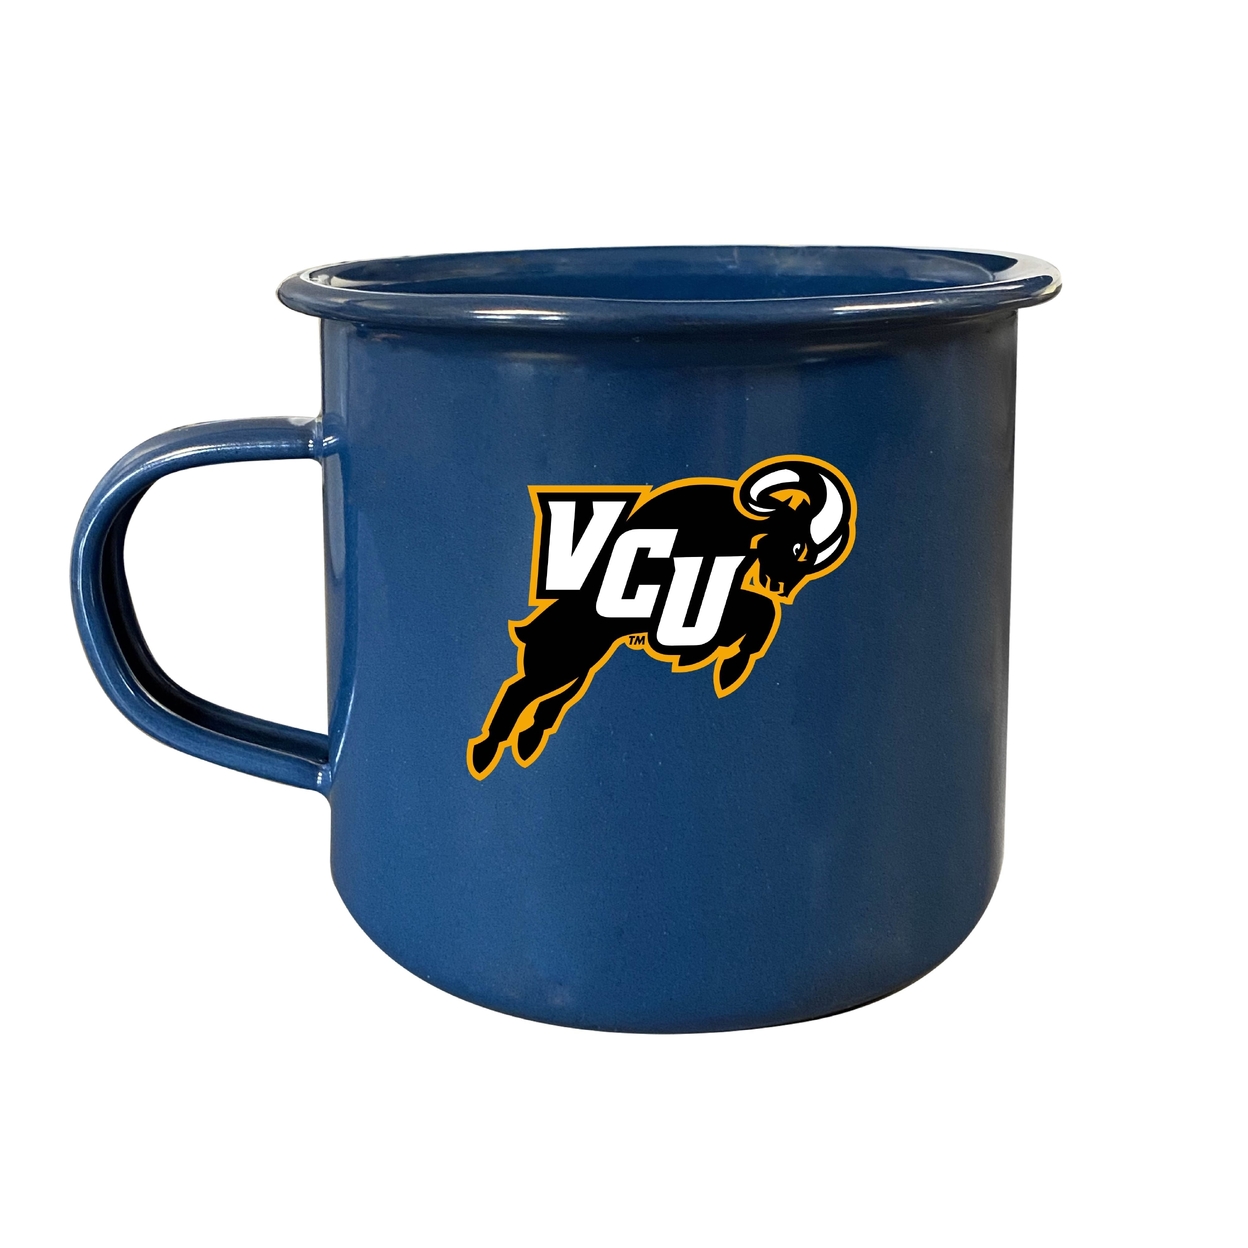 Virginia Commonwealth Tin Camper Coffee Mug - Choose Your Color - Navy